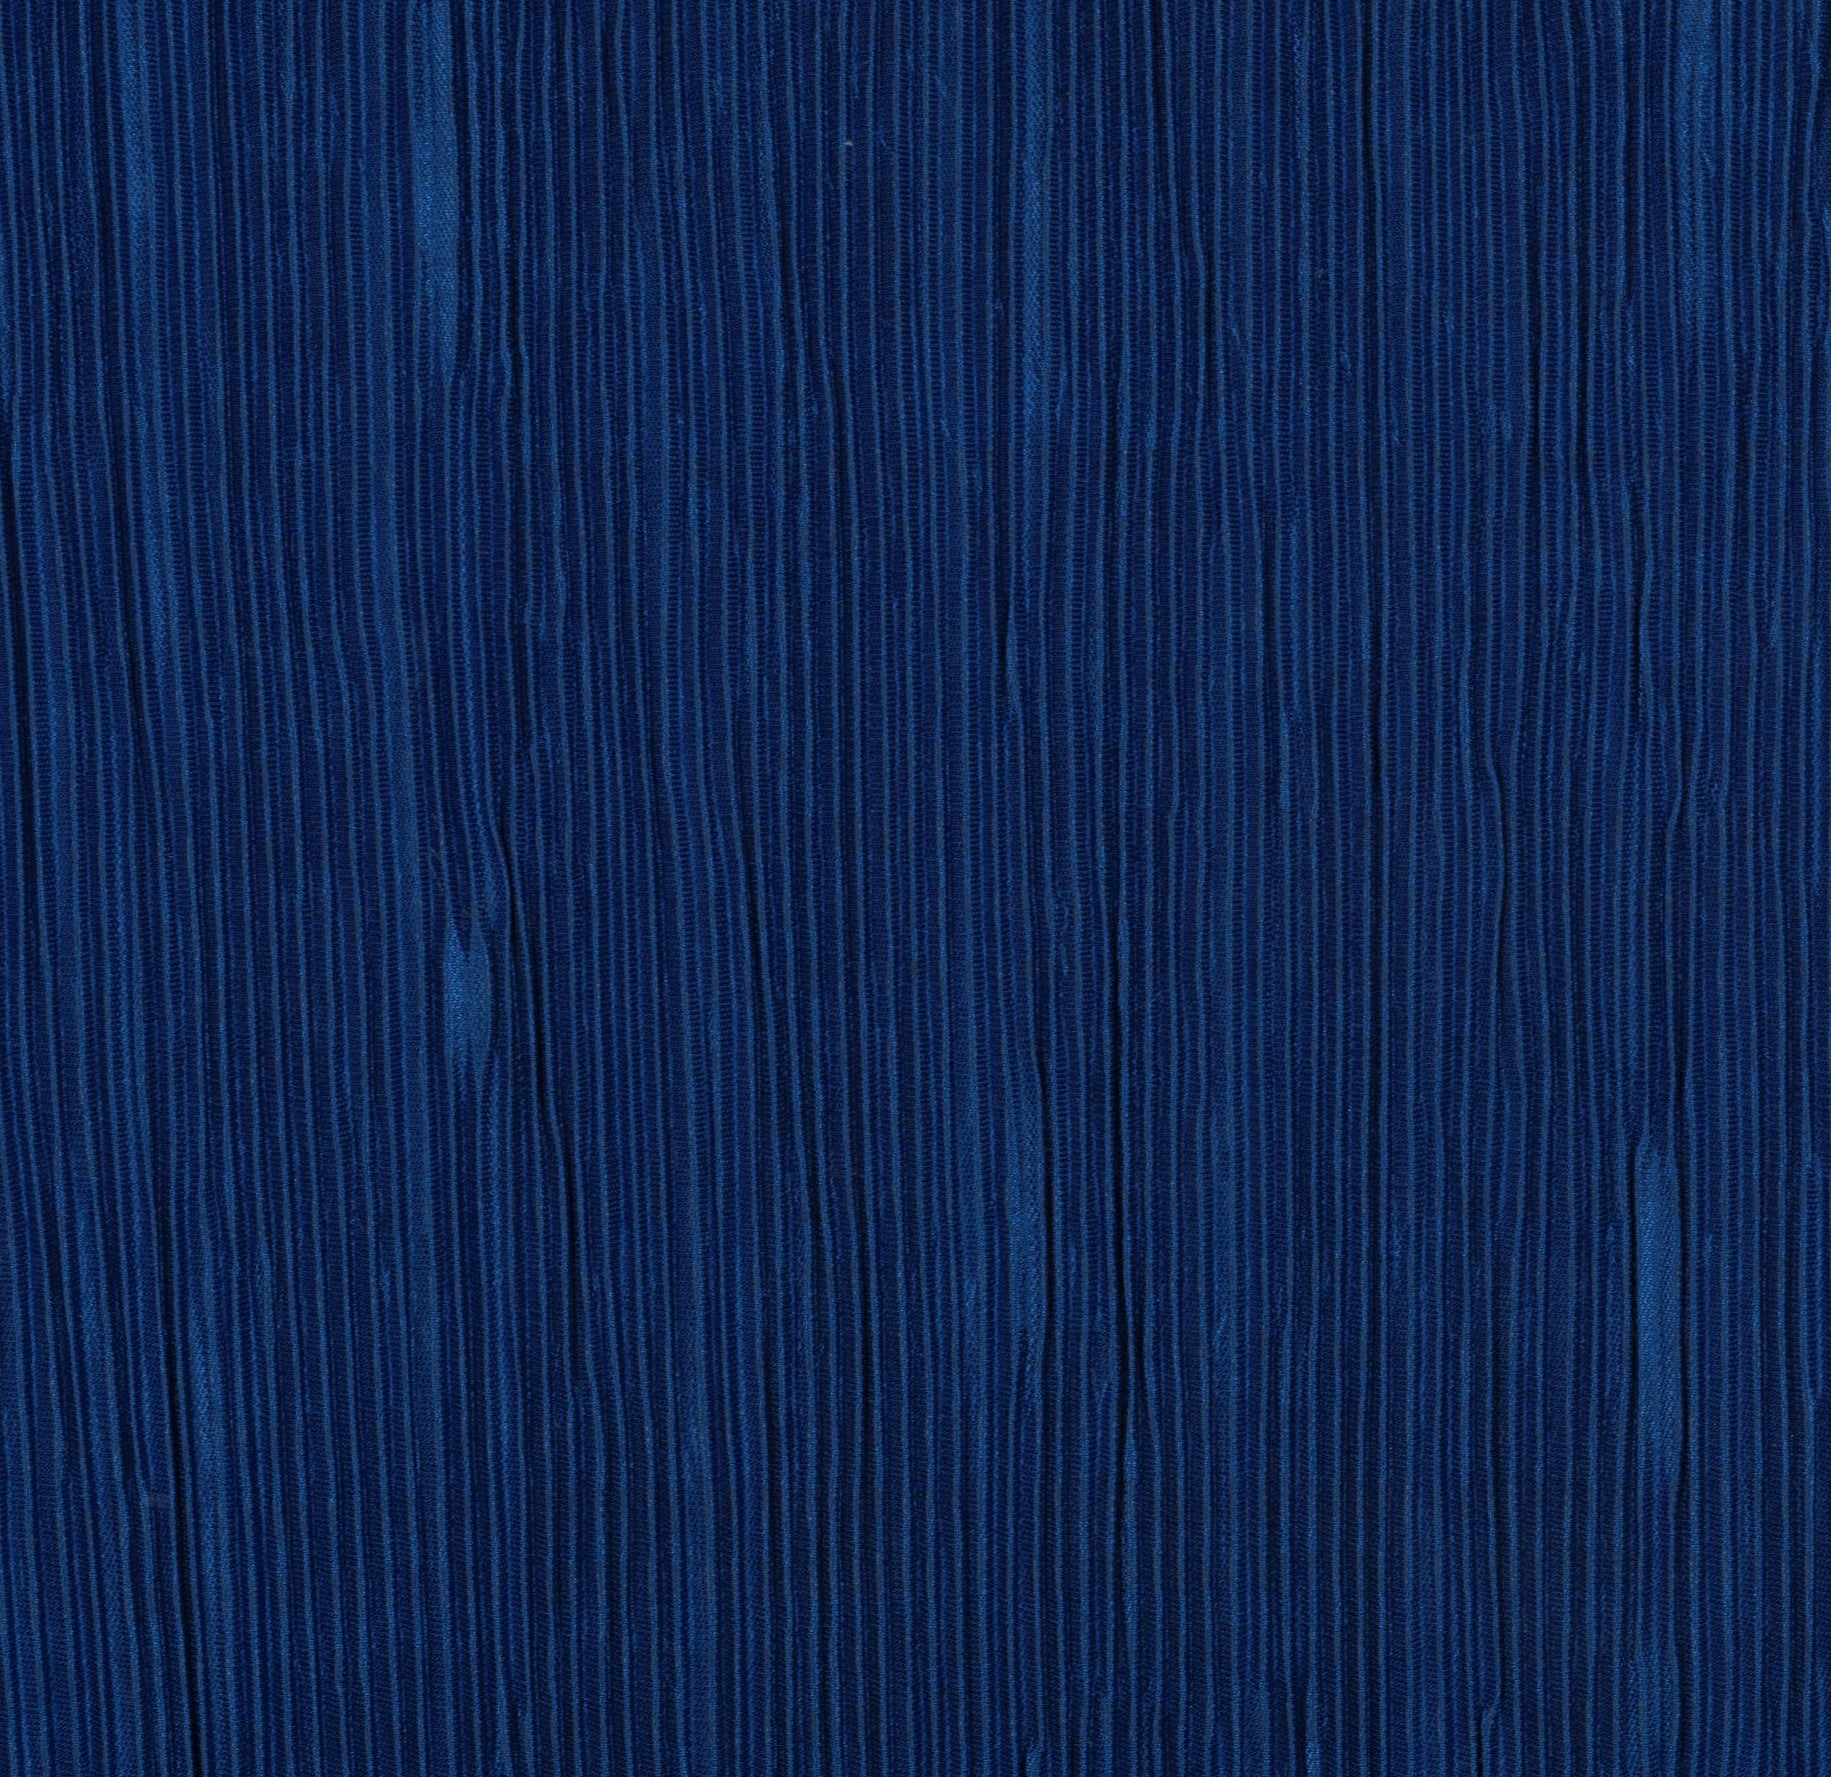 9761-03 Royal Blue Polyester Pleat Plain Dyed 100% 180g/yd 56&quot; blue knit plain dyed pleat polyester Solid Color, Pleat - knit fabric - woven fabric - fabric company - fabric wholesale - fabric b2b - fabric factory - high quality fabric - hong kong fabric - fabric hk - acetate fabric - cotton fabric - linen fabric - metallic fabric - nylon fabric - polyester fabric - spandex fabric - chun wing hing - cwh hk - fabric worldwide ship - 針織布 - 梳織布 - 布料公司- 布料批發 - 香港布料 - 秦榮興